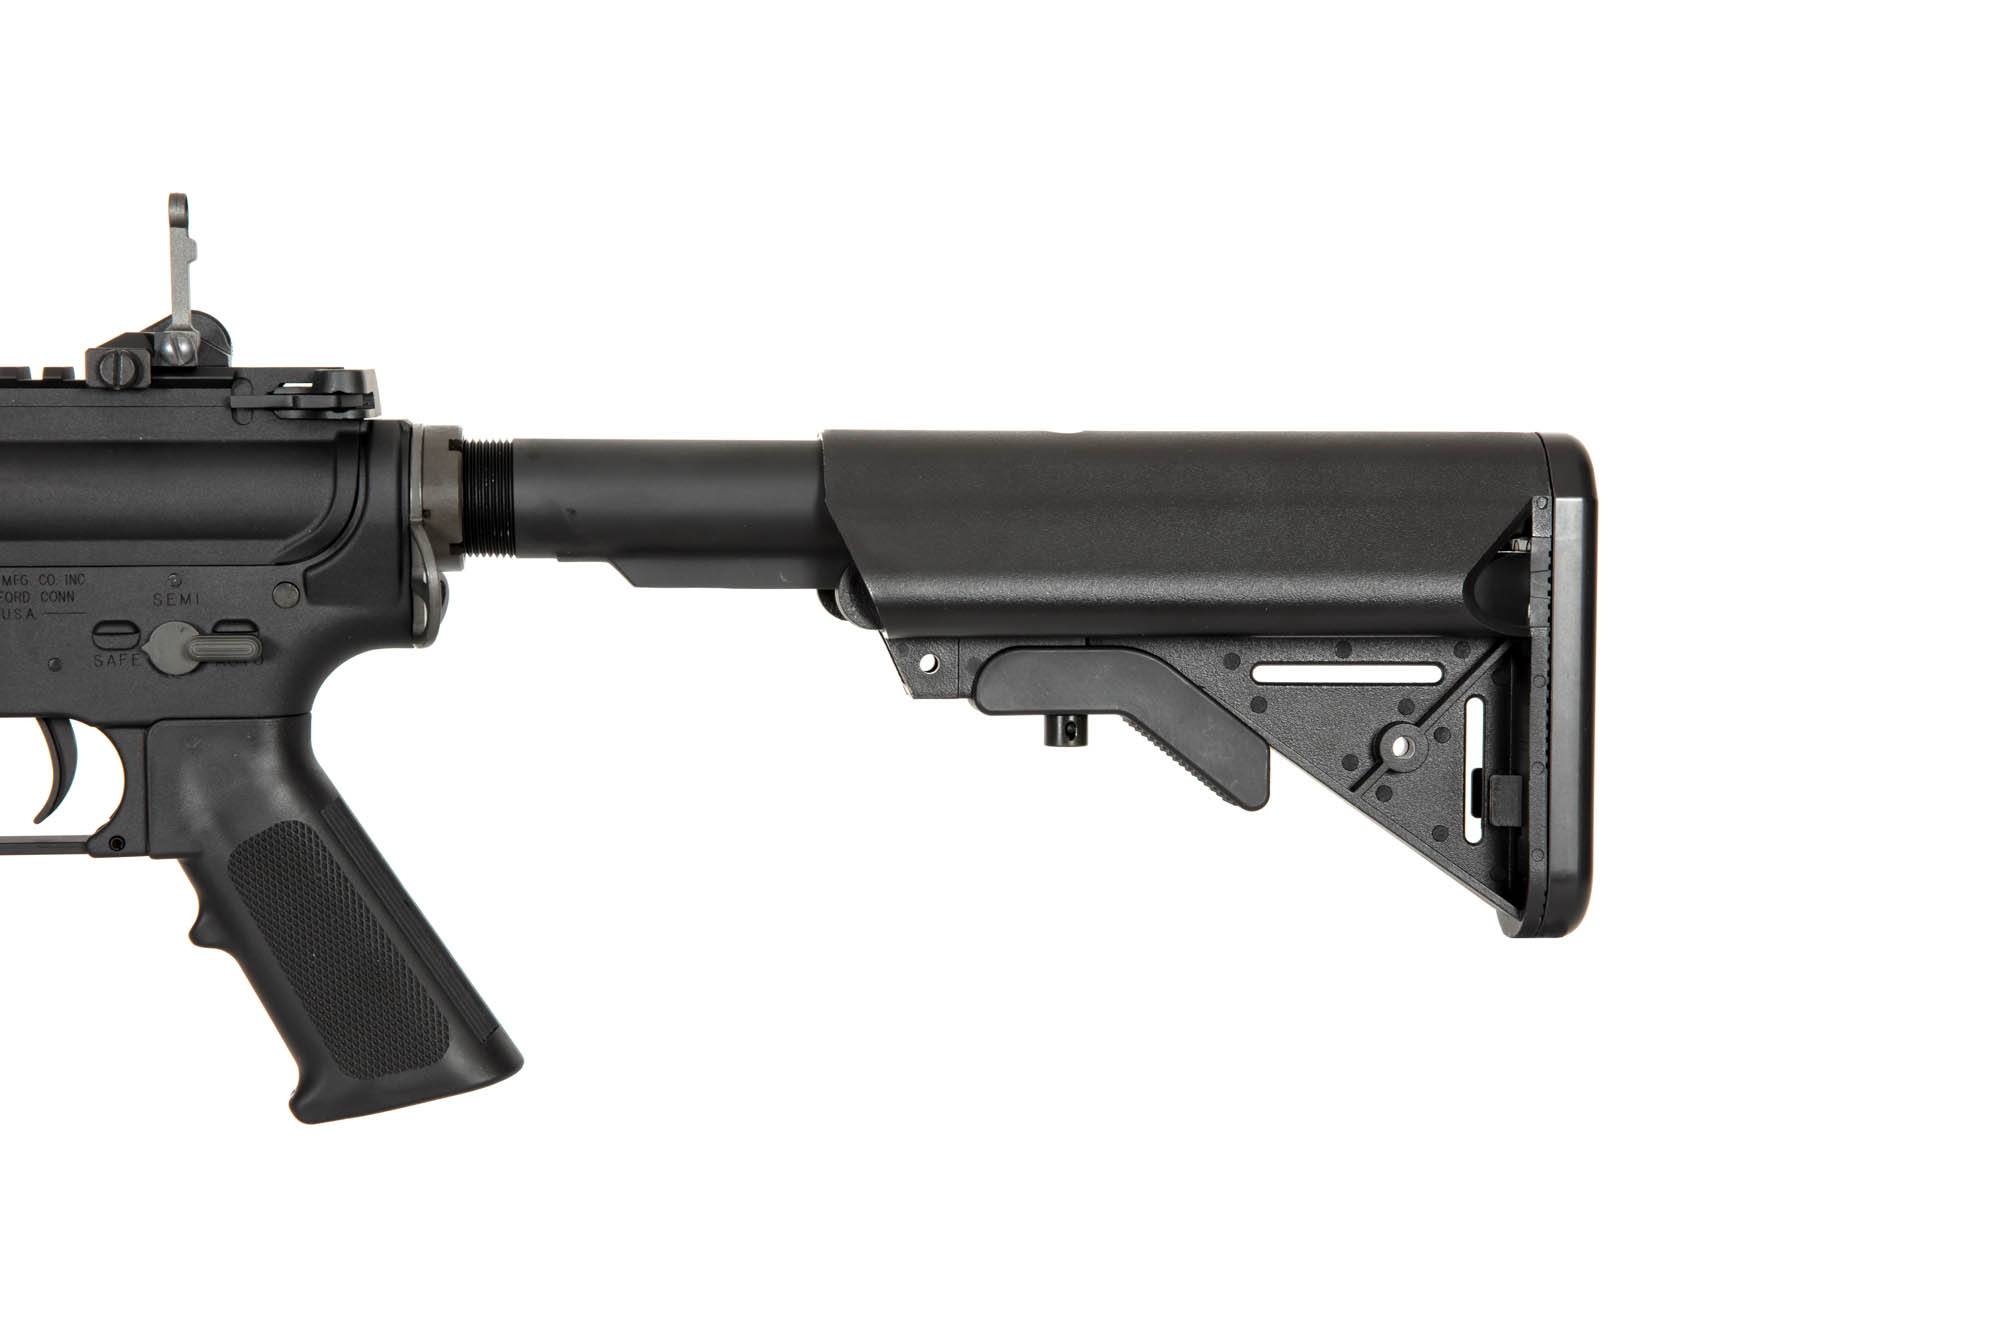 VF1-LMK18M1 (Colt MK18 MOD 1) Carbine Replica - black by VFC on Airsoft Mania Europe